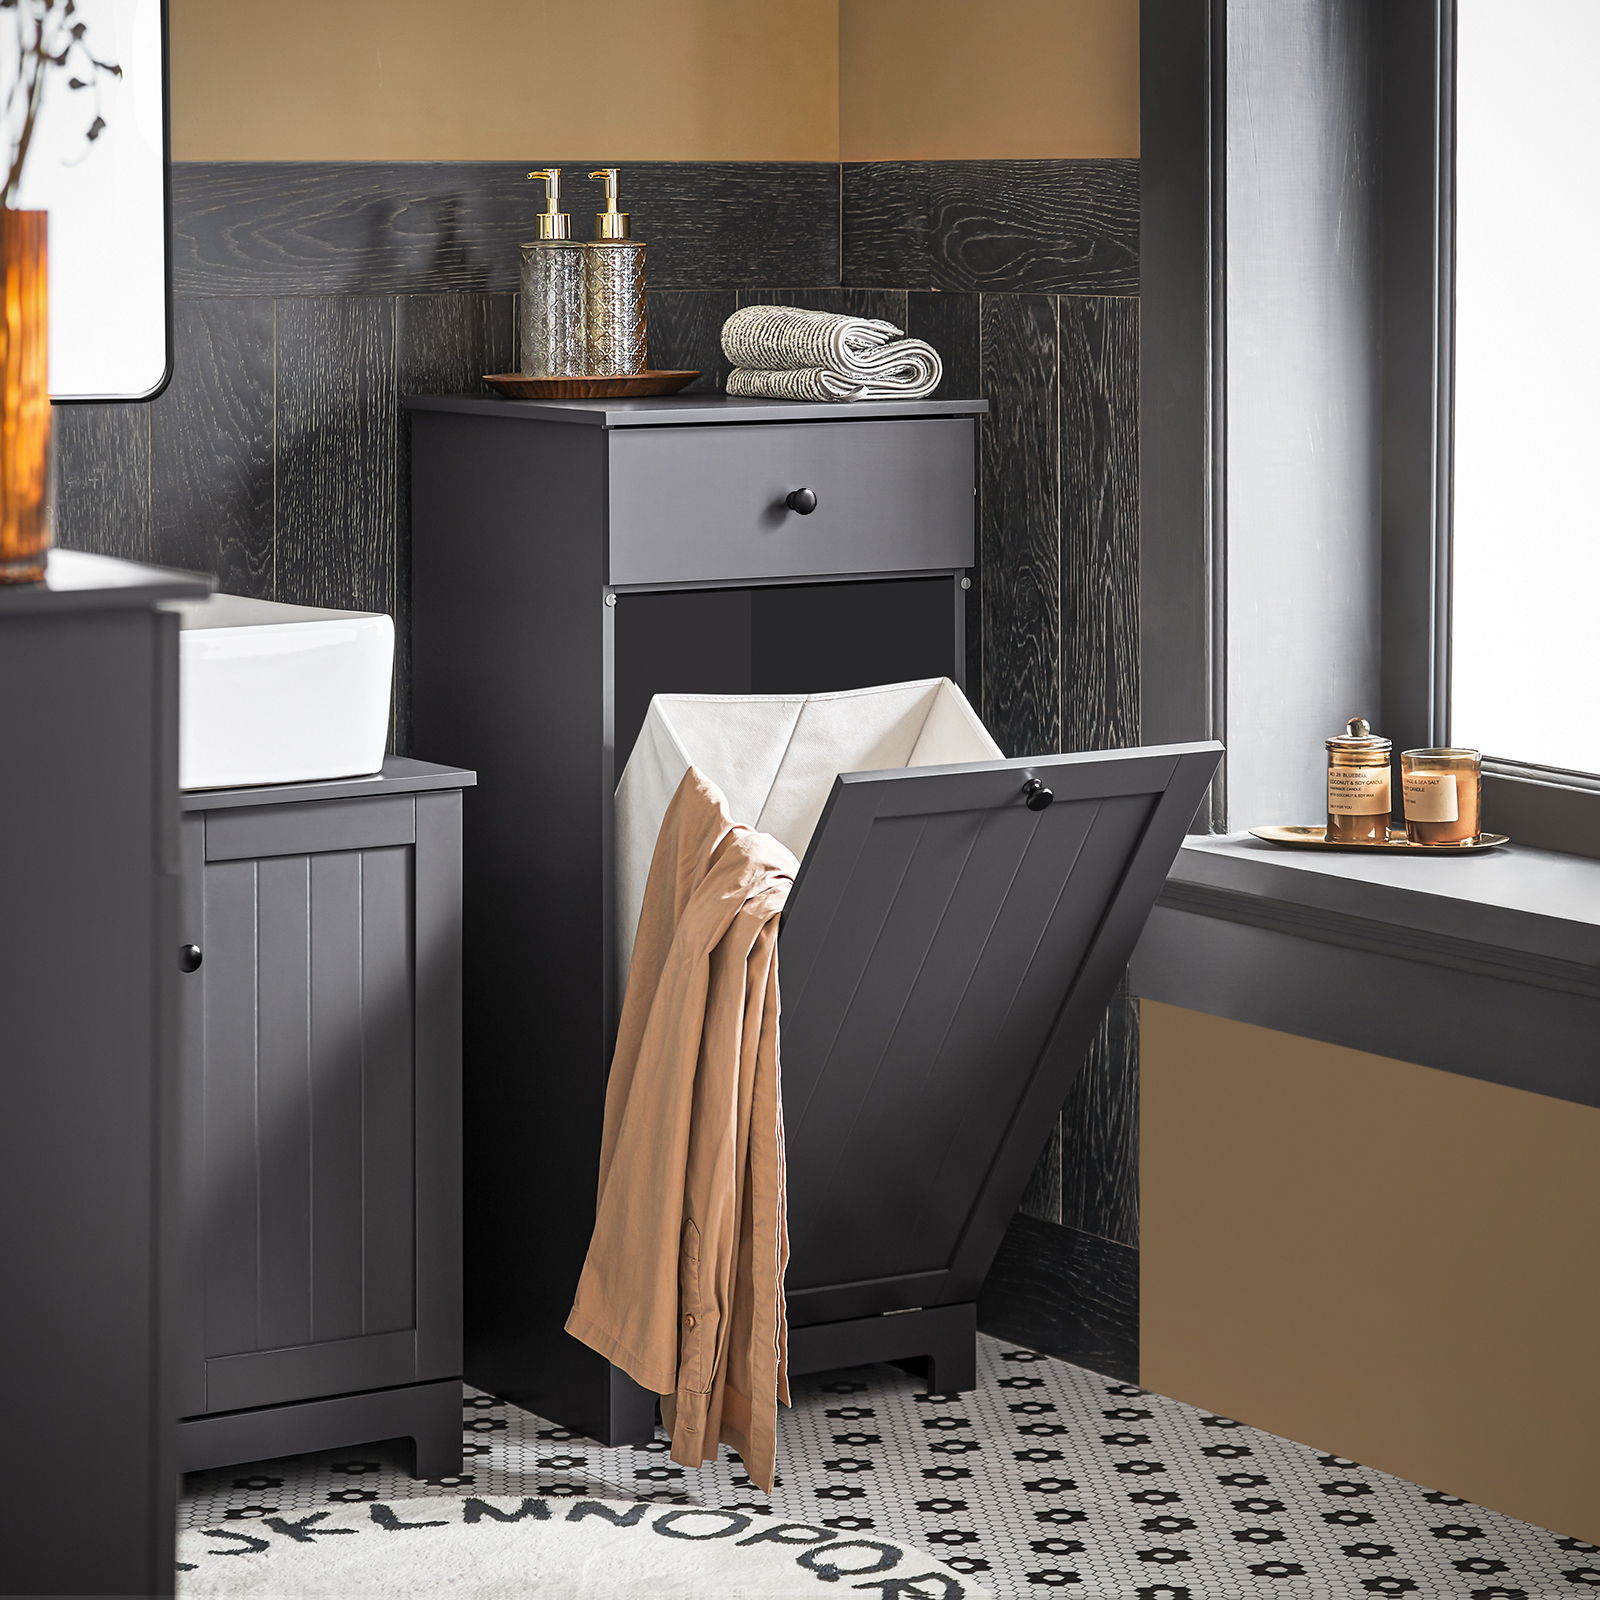 SoBuy BZR21-DG, Bathroom Laundry Basket Bathroom Storage Cabinet Unit with Drawer, 40x38x90cm